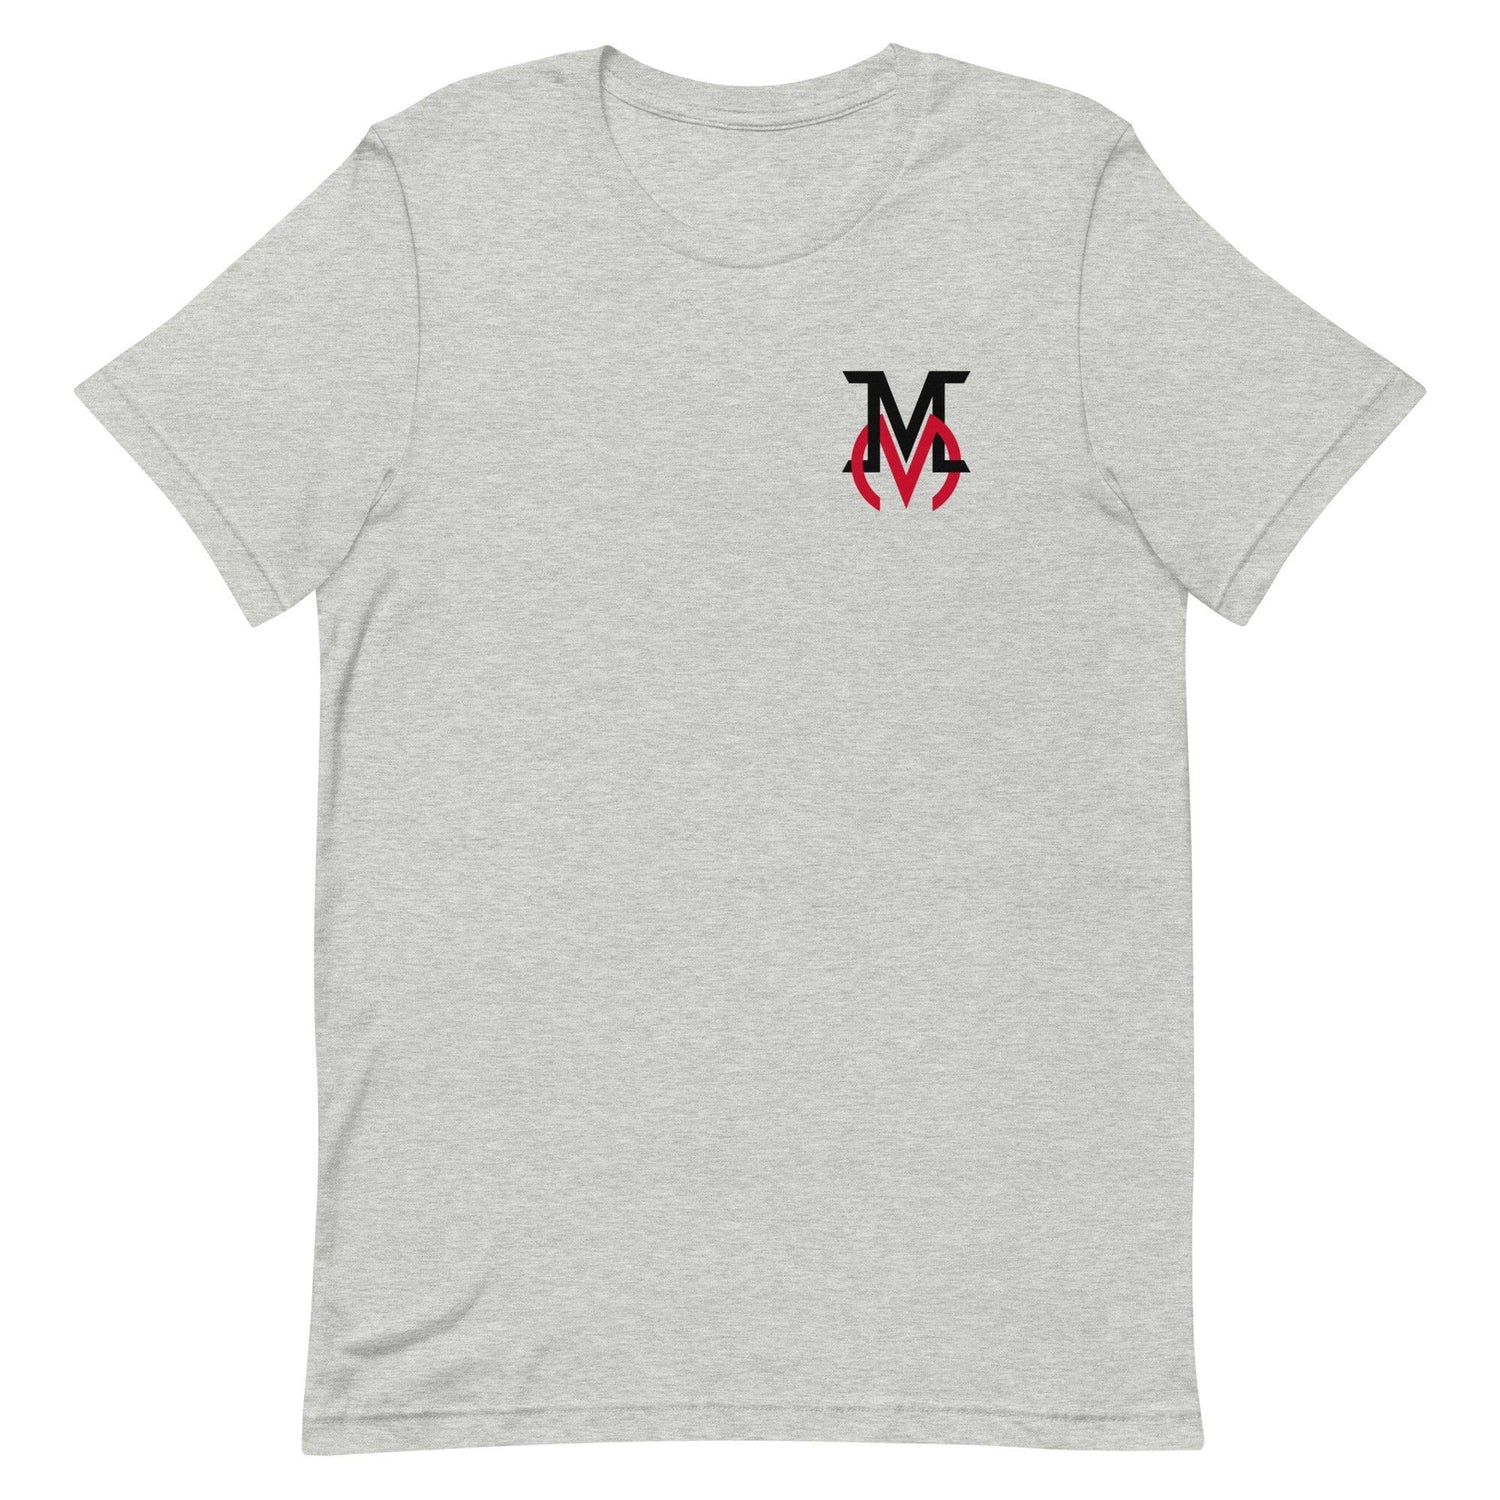 Mike Minor "Essentials" t-shirt - Fan Arch